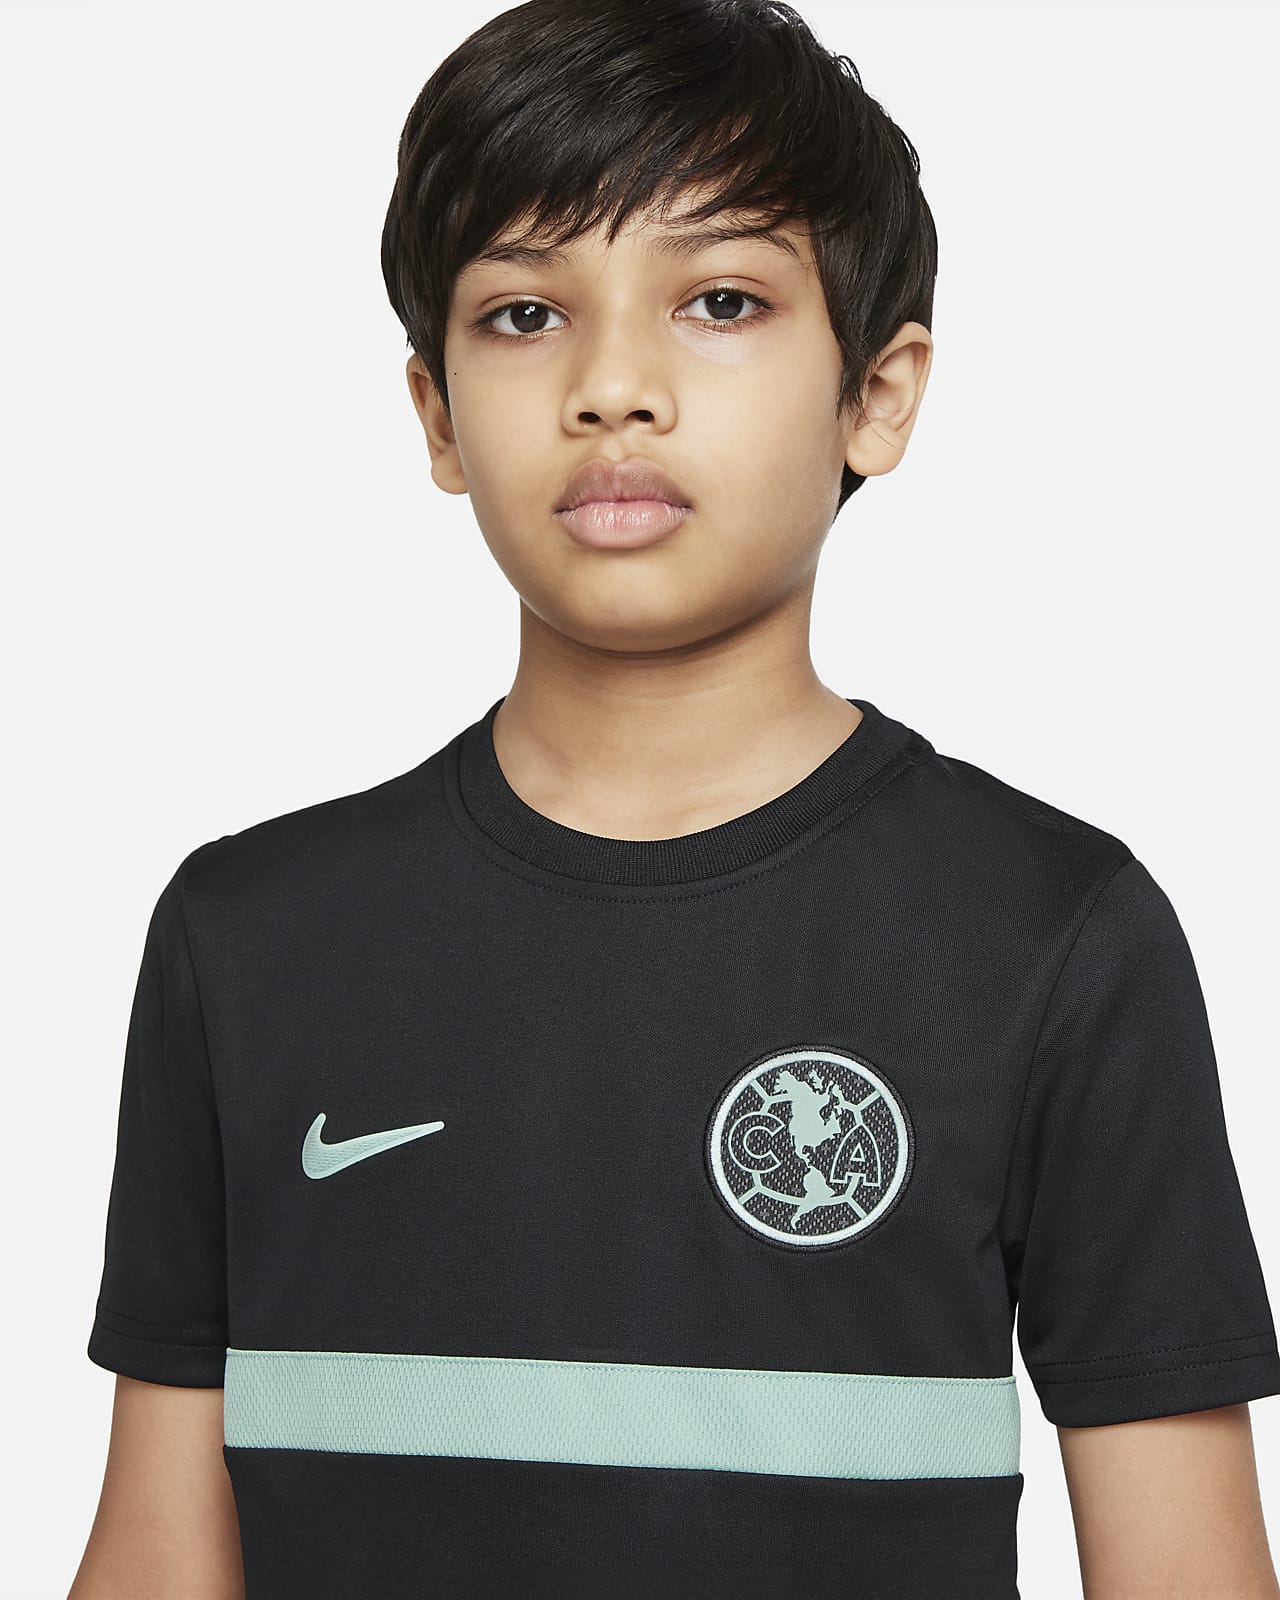 Playera fútbol de manga corta Nike Dri-FIT para niños talla grande Club América Academy Pro. Nike.com